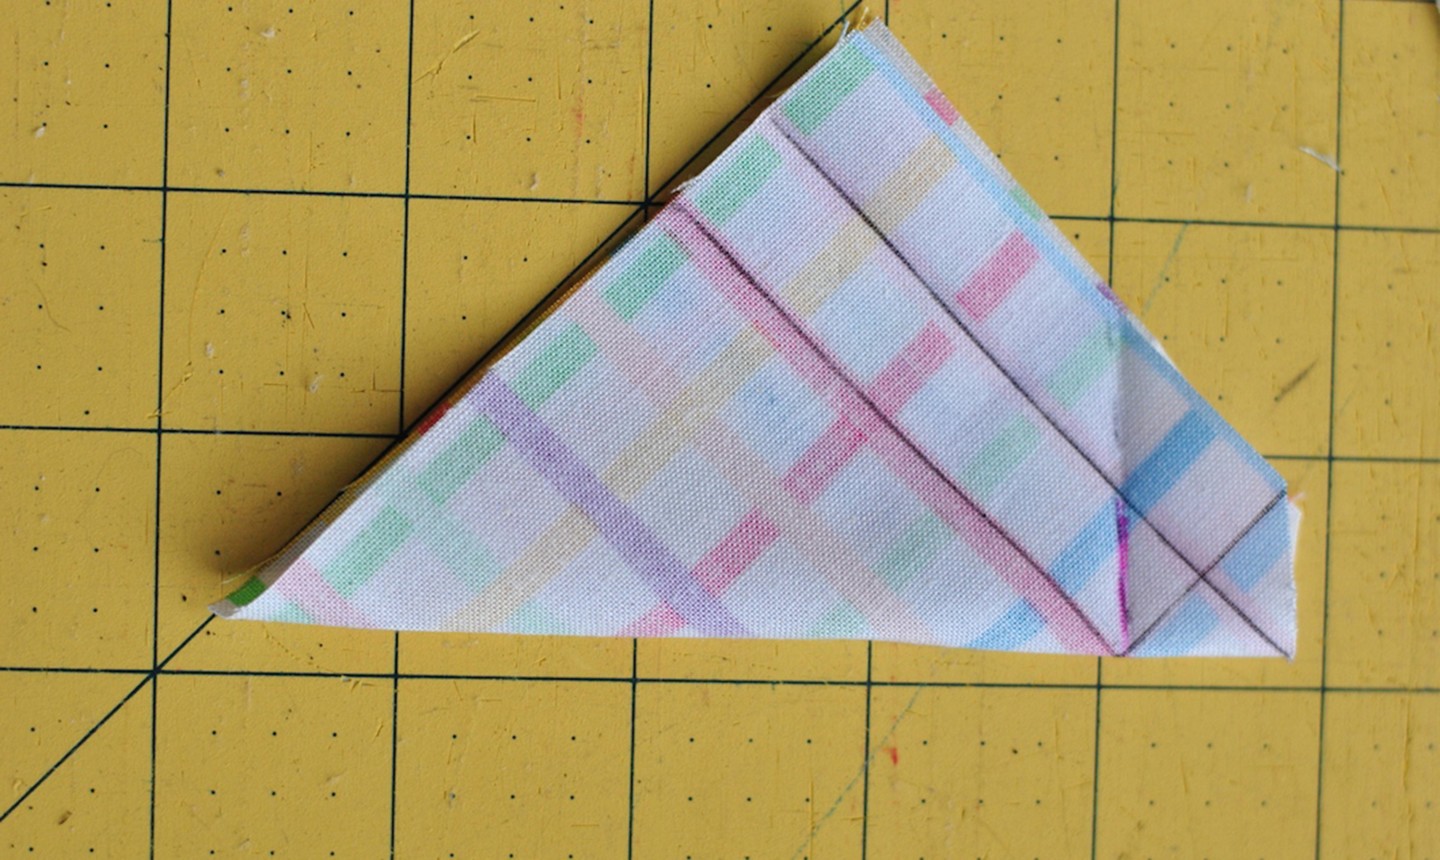 folded napkin